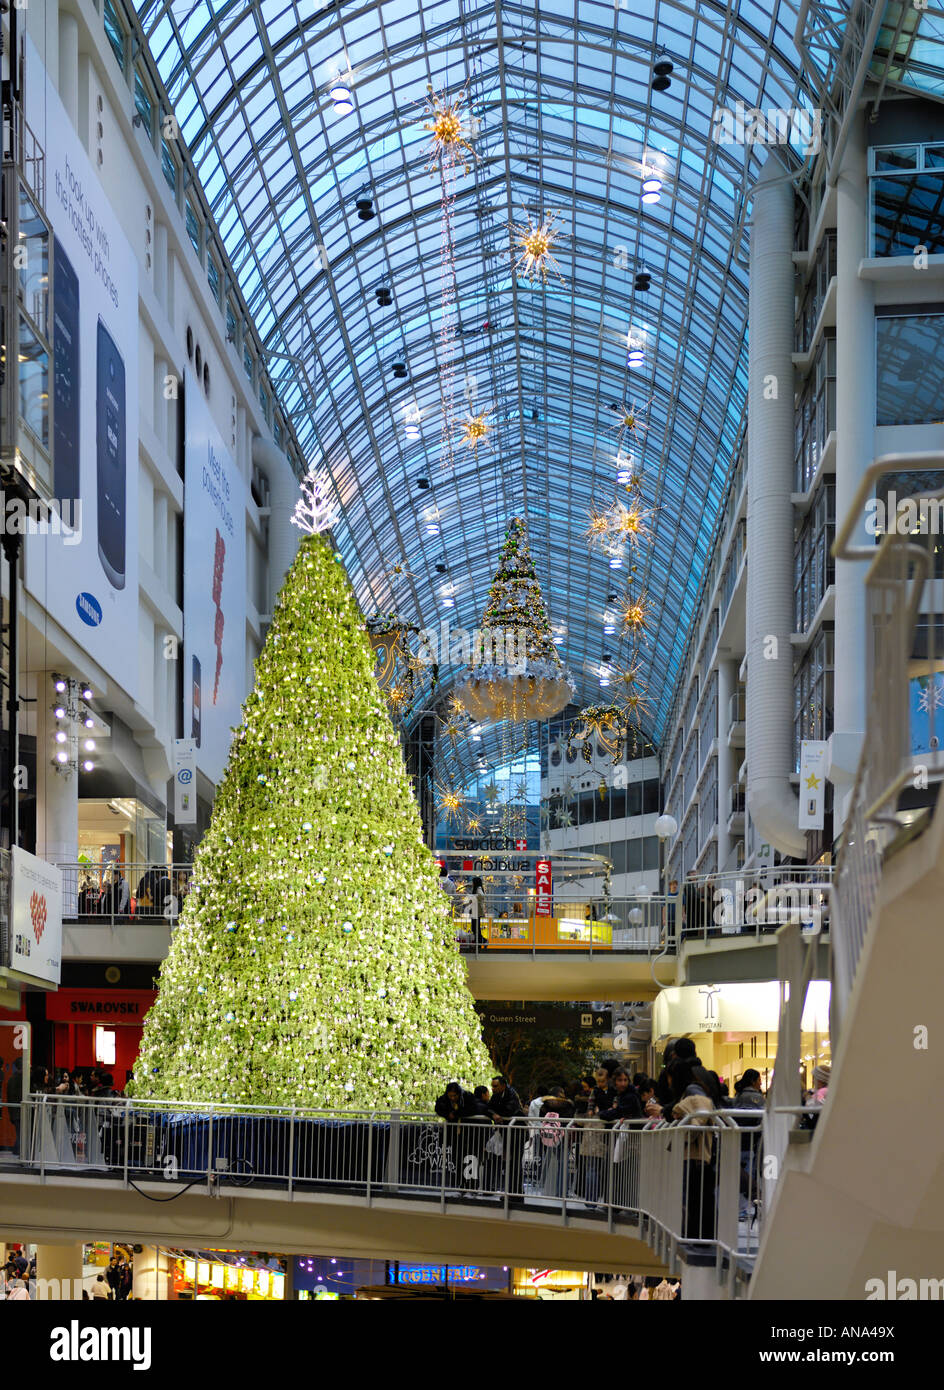 Toronto Eaton Centre Christmas tree decoration in a shopping mall Stock Photo